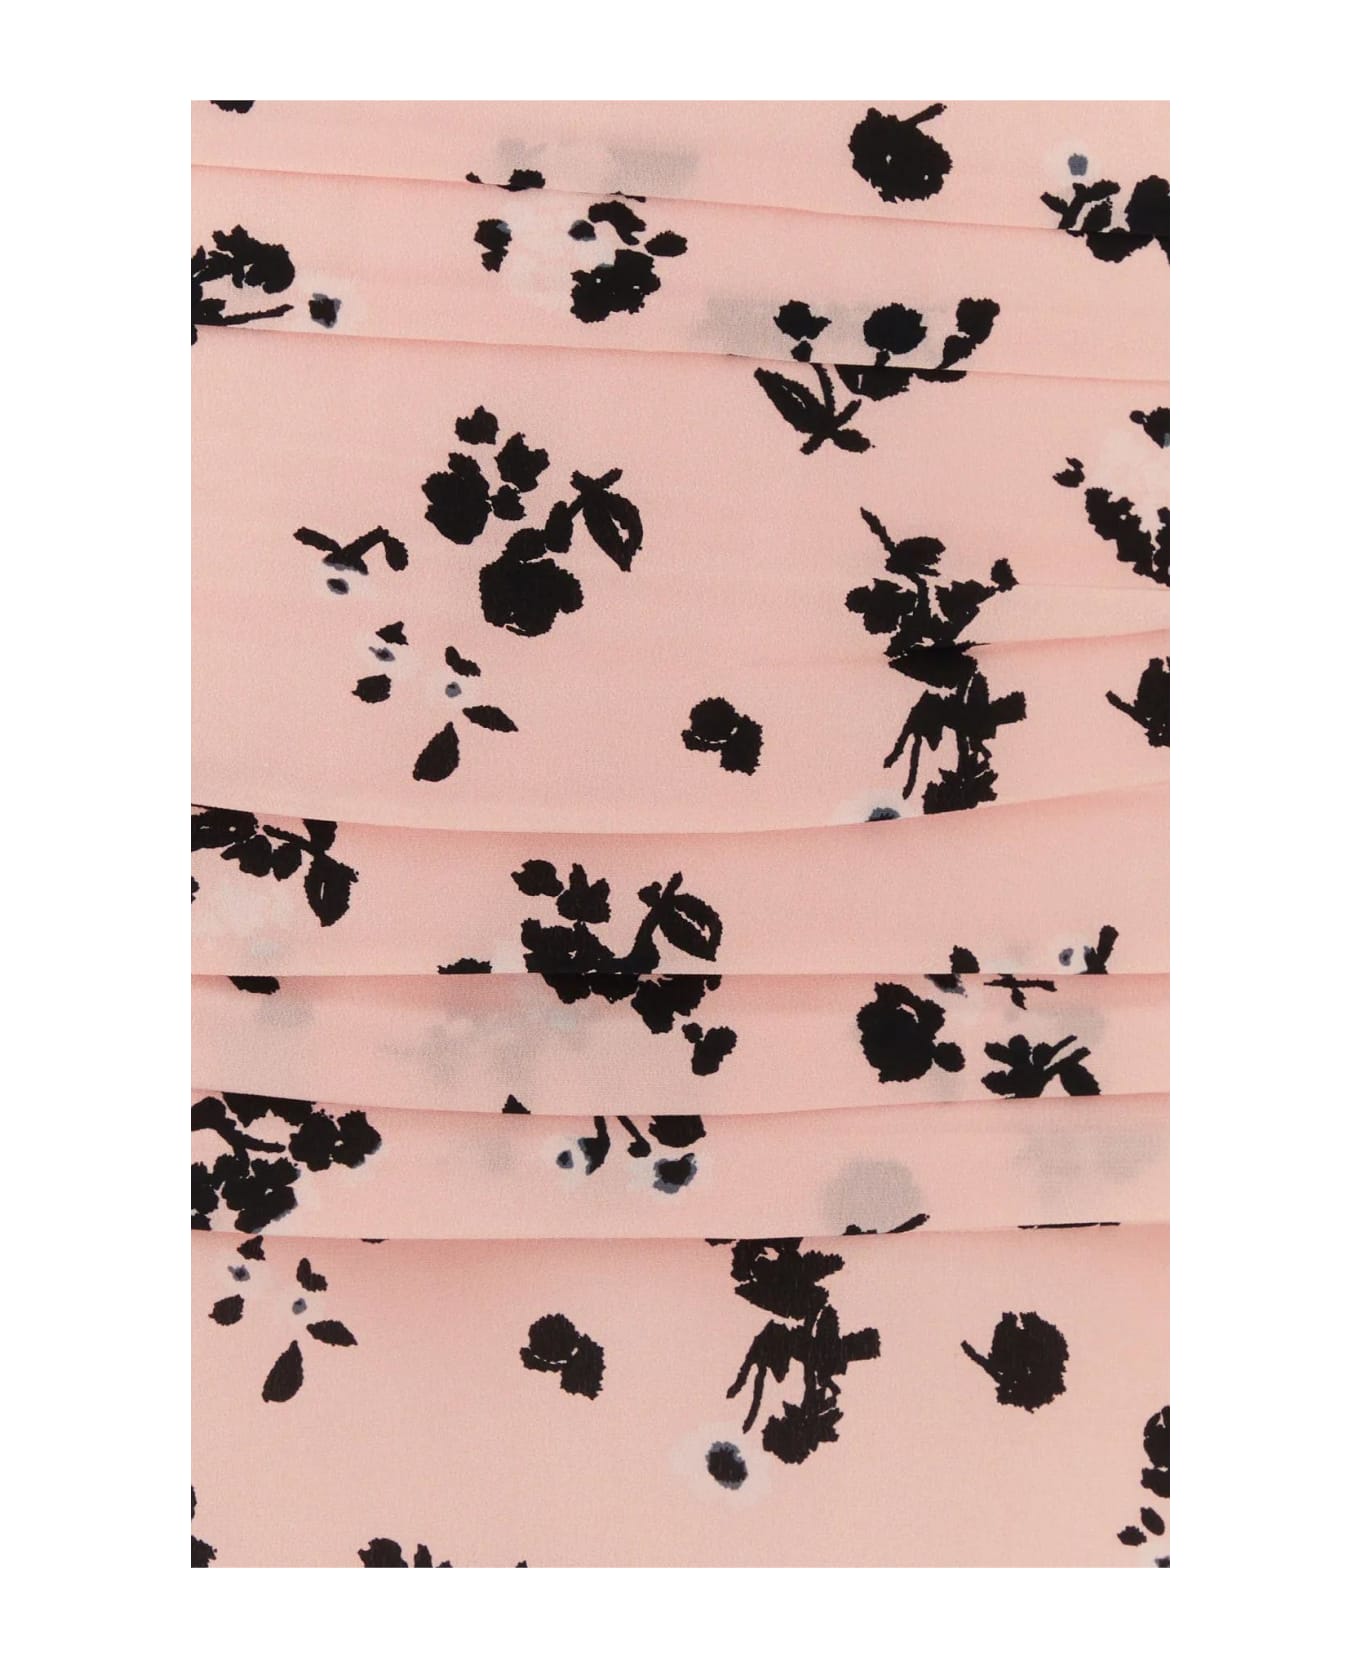 Alessandra Rich Printed Silk Dress - Light Pink